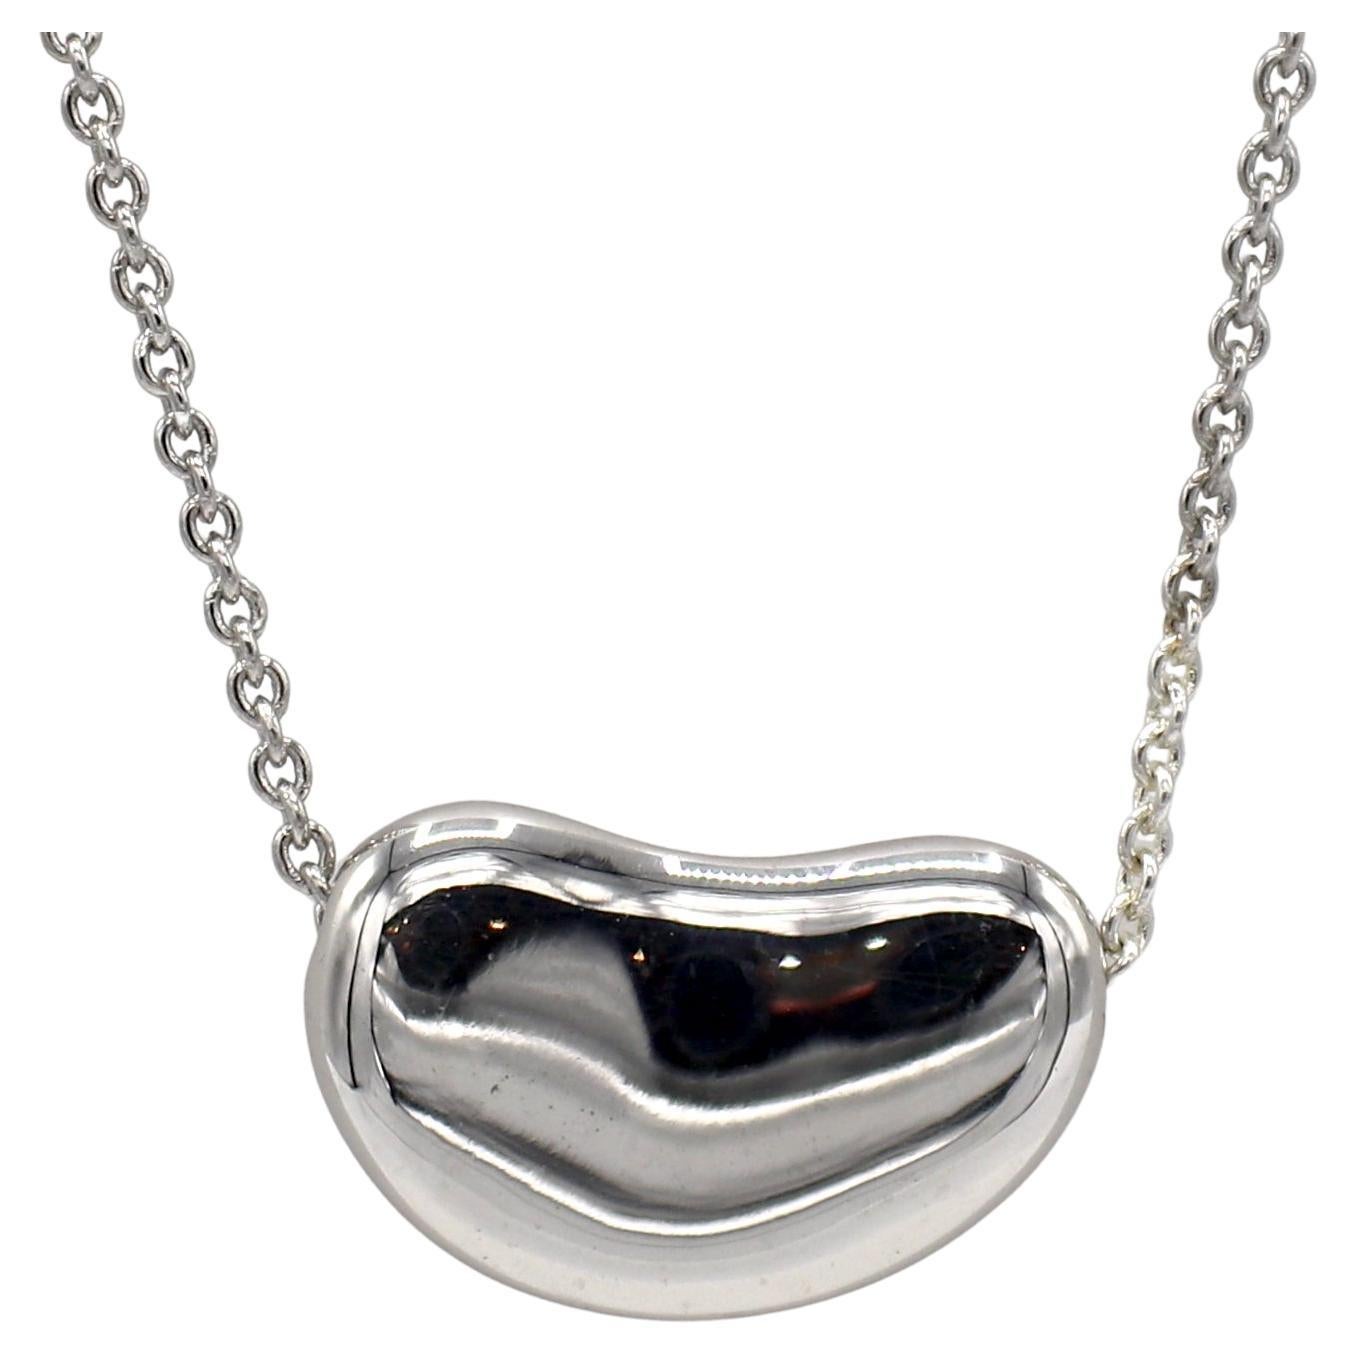 Tiffany & Co. Elsa Peretti Stelring Silver Bean Pendant Drop Necklace